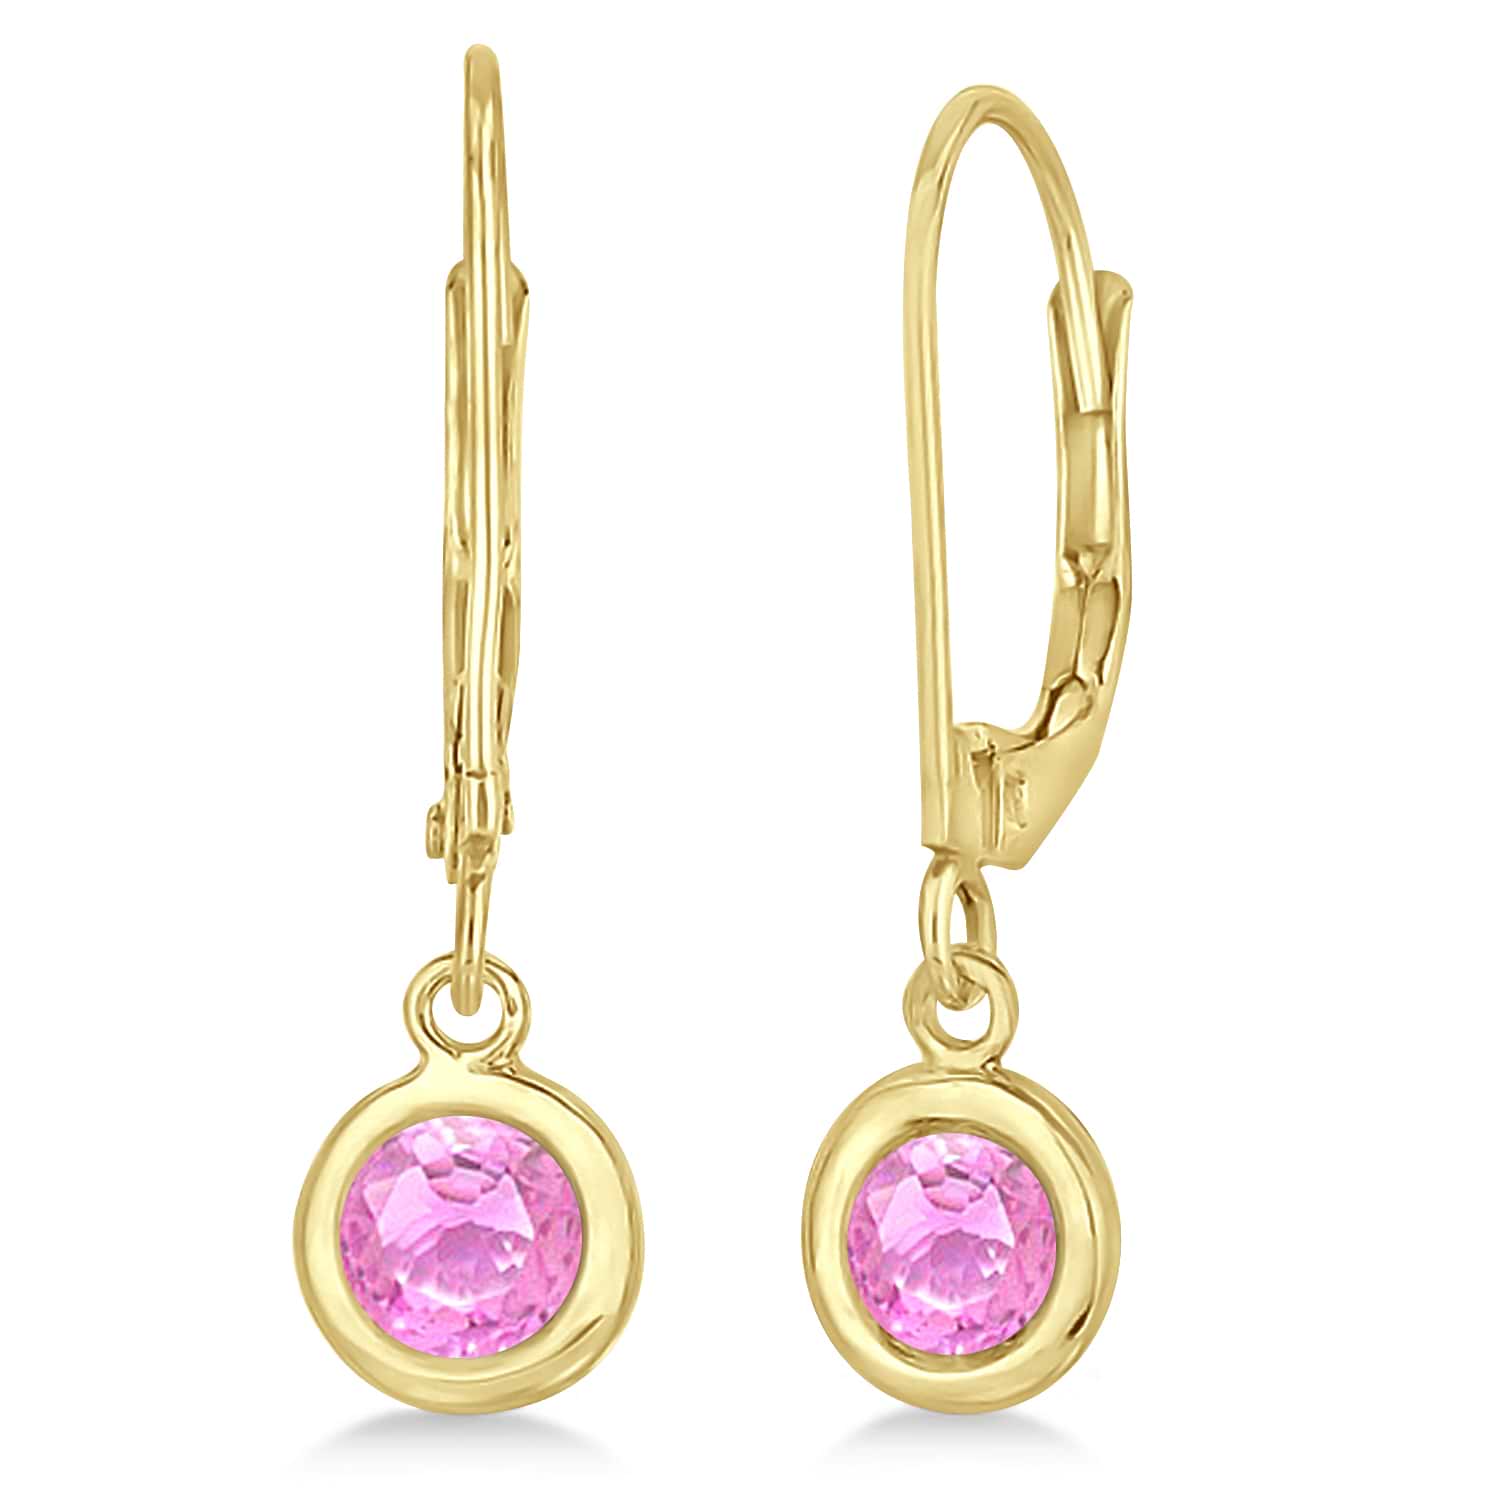 Leverback Dangling Drop Pink Sapphire Earrings 14k Yellow Gold (1.00ct)